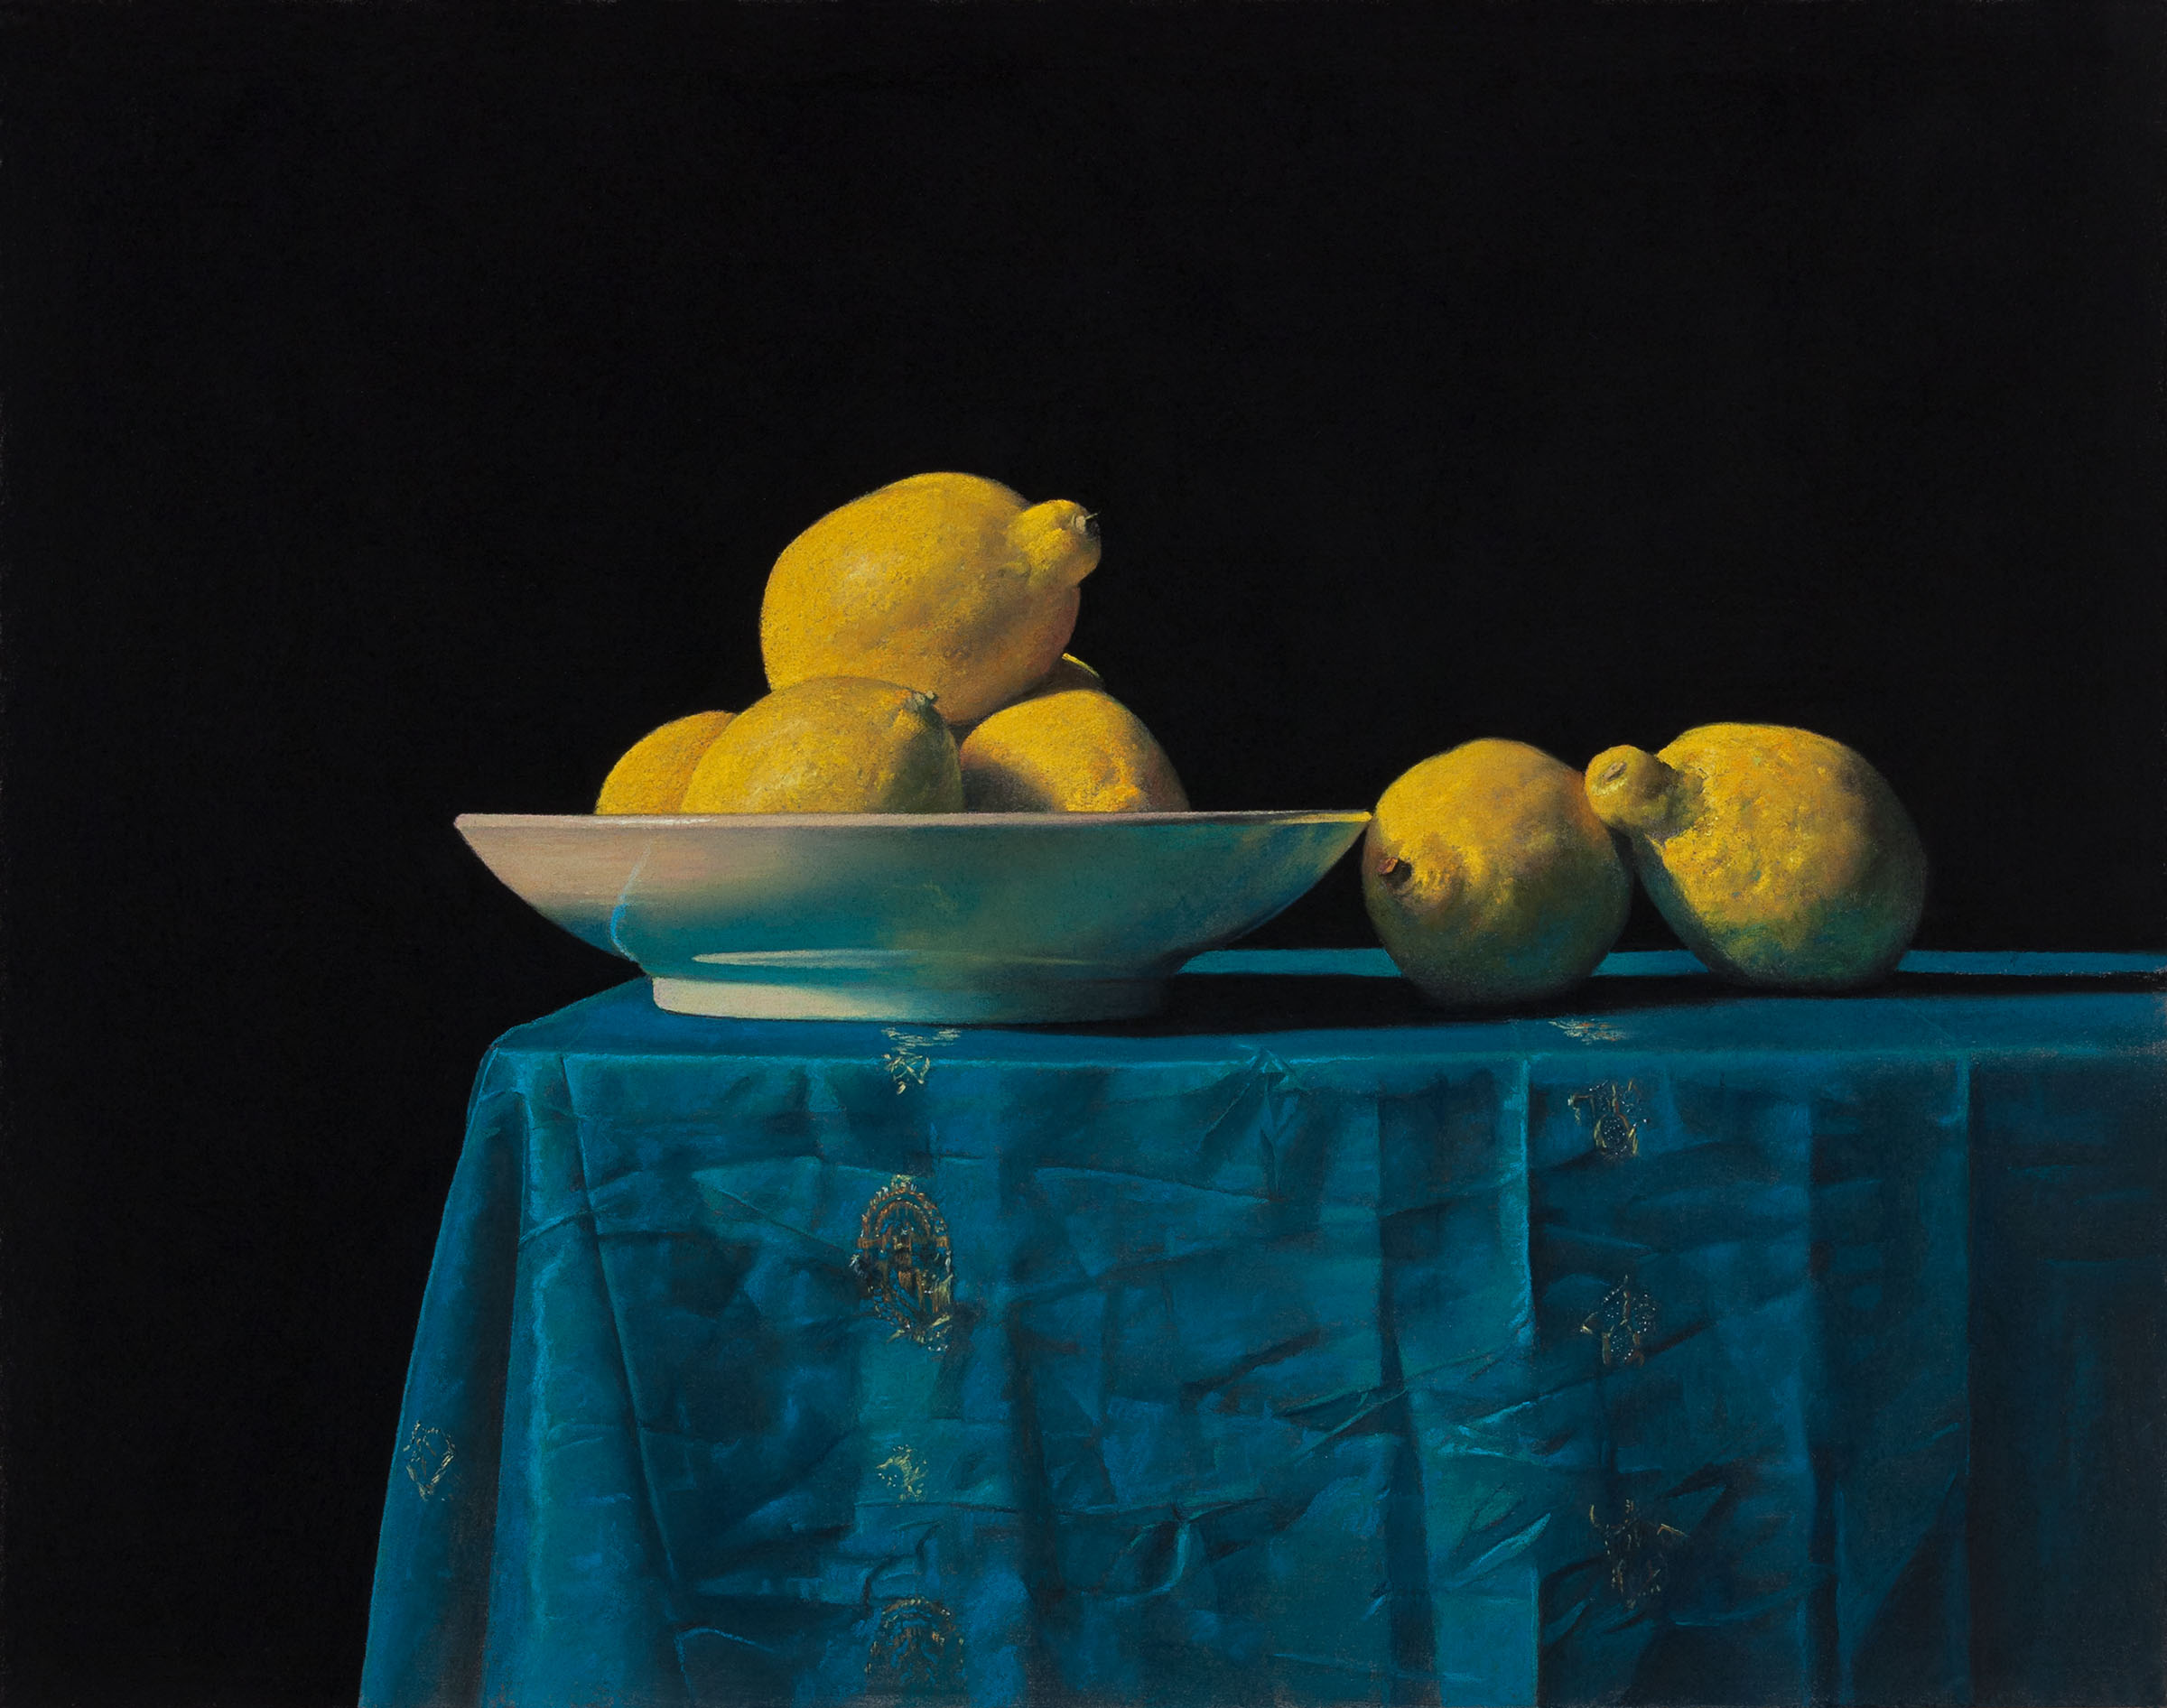 lemons on a blue tablecloth